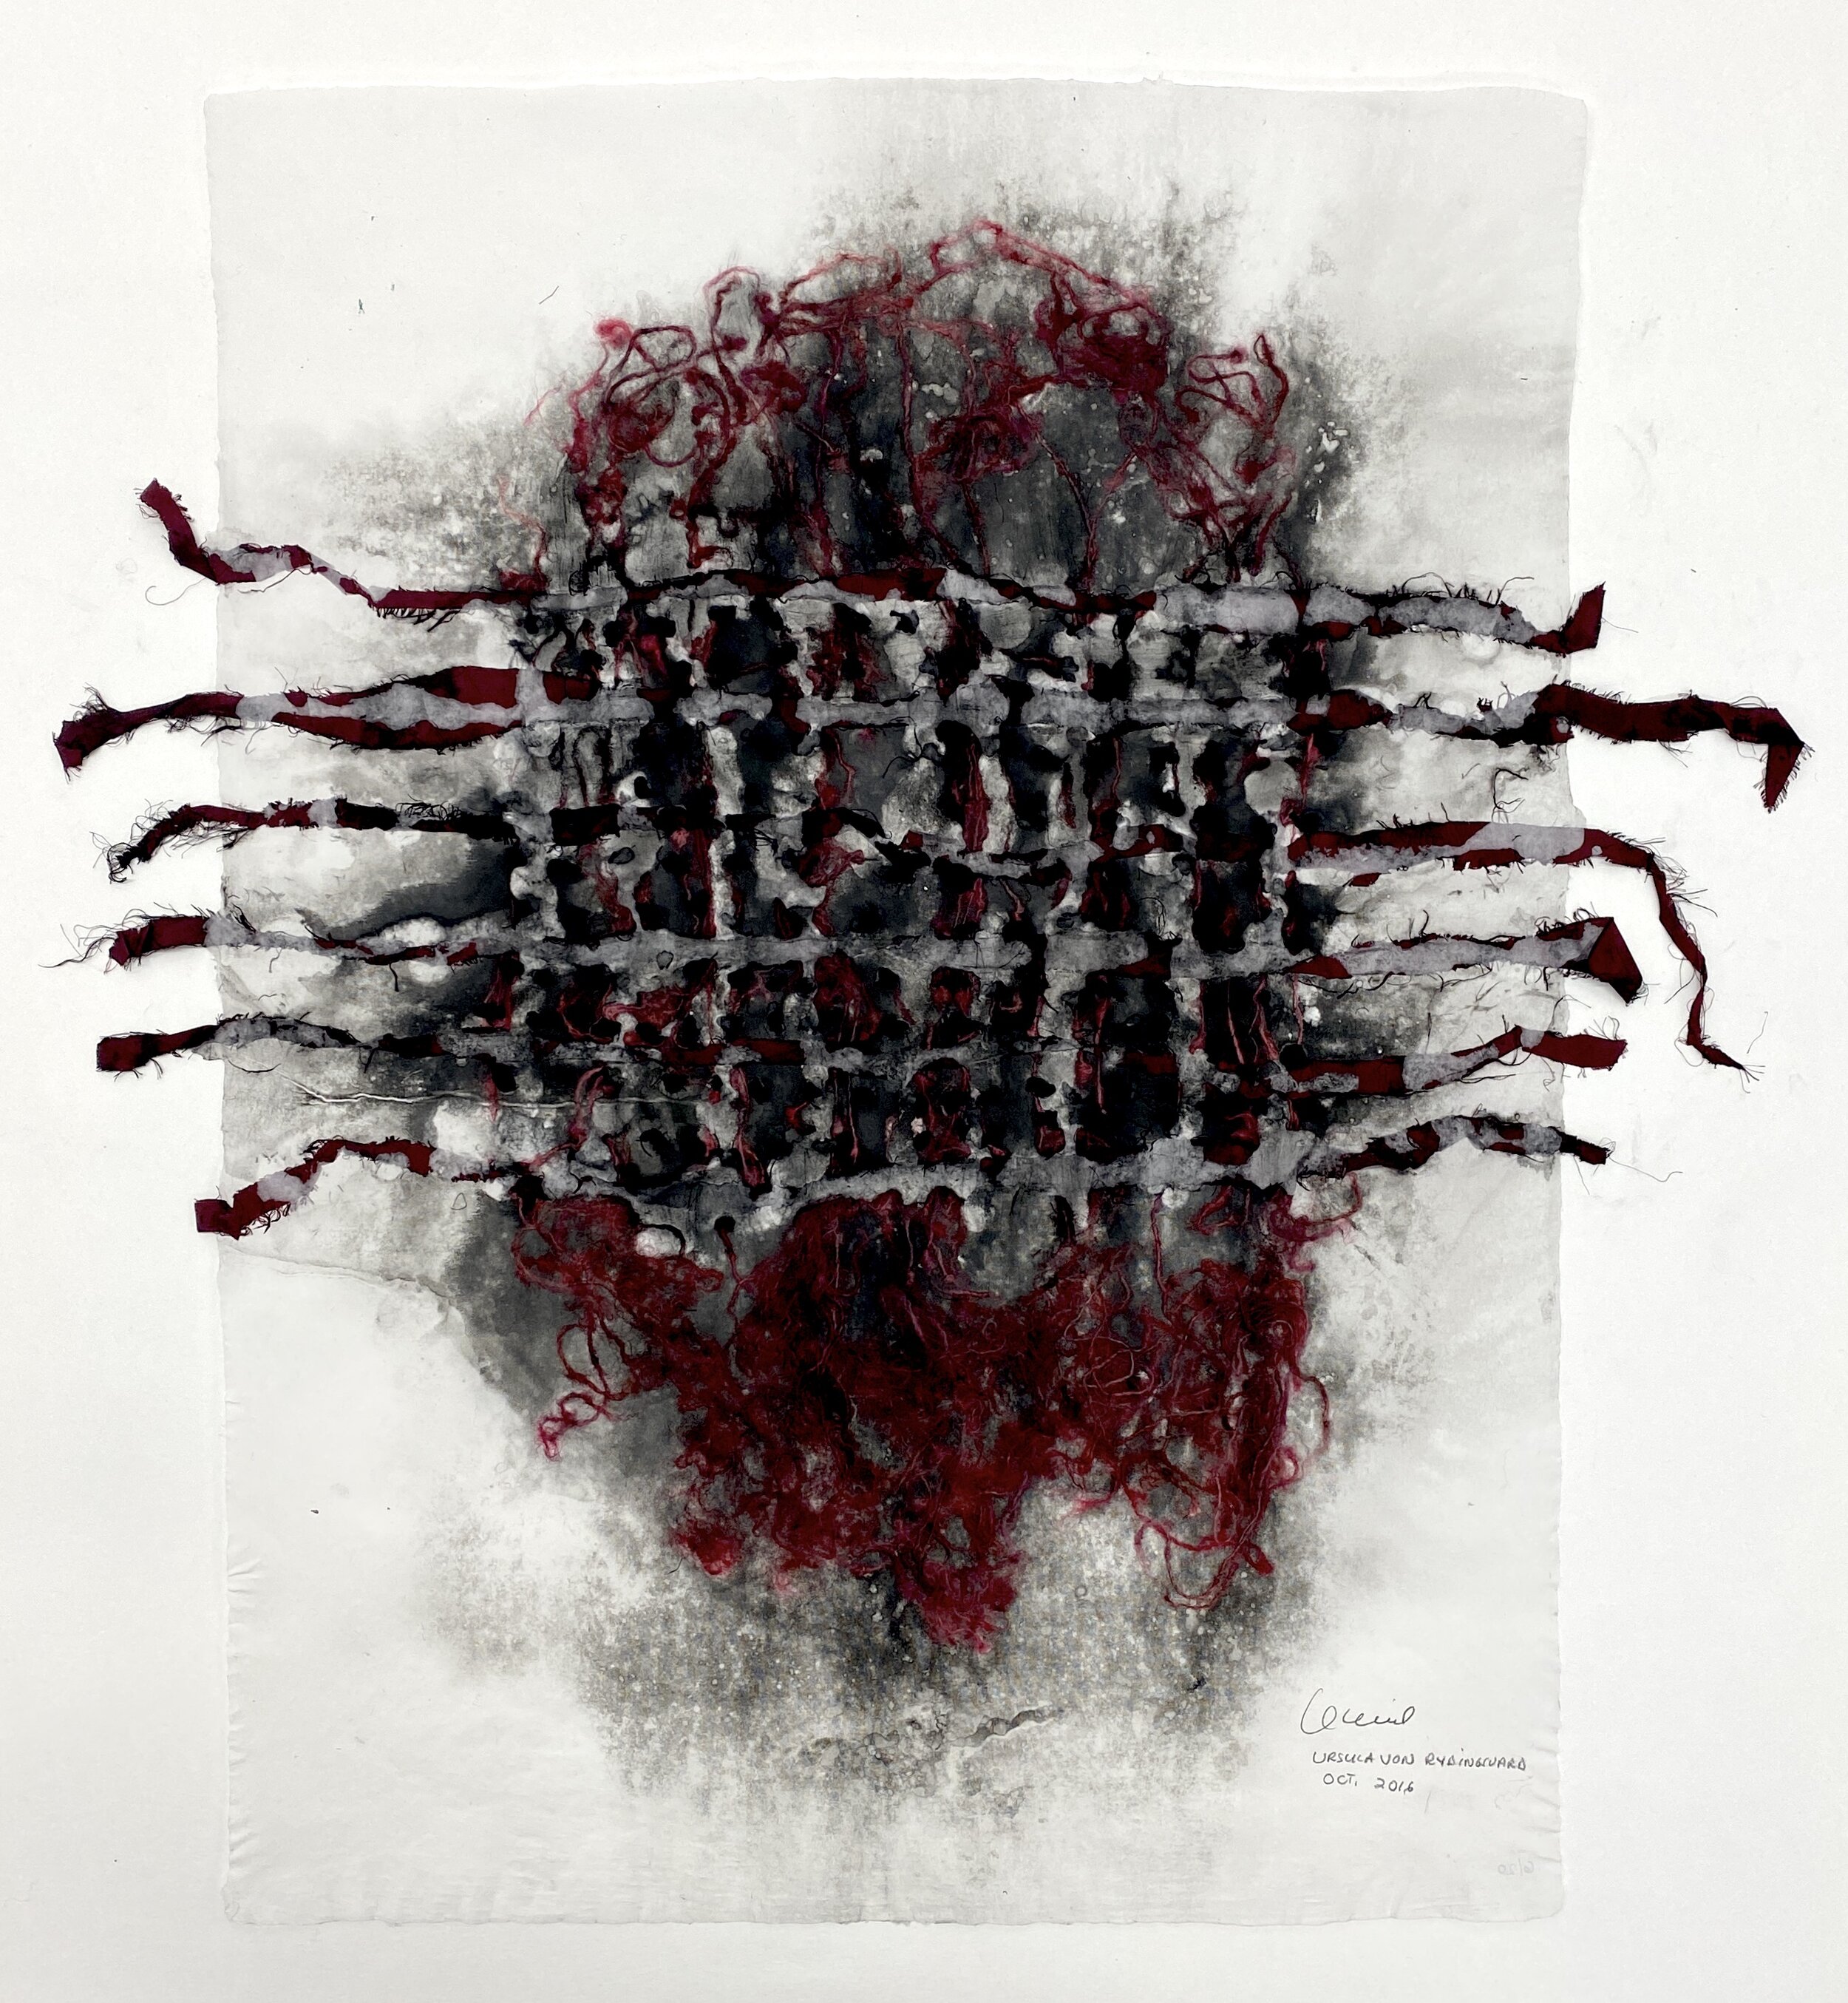  Ursula Von Rydingsvard,  Kasia , 2016, Silk, pigment, linen and handmade paper, 29.5 x 26 inches. 